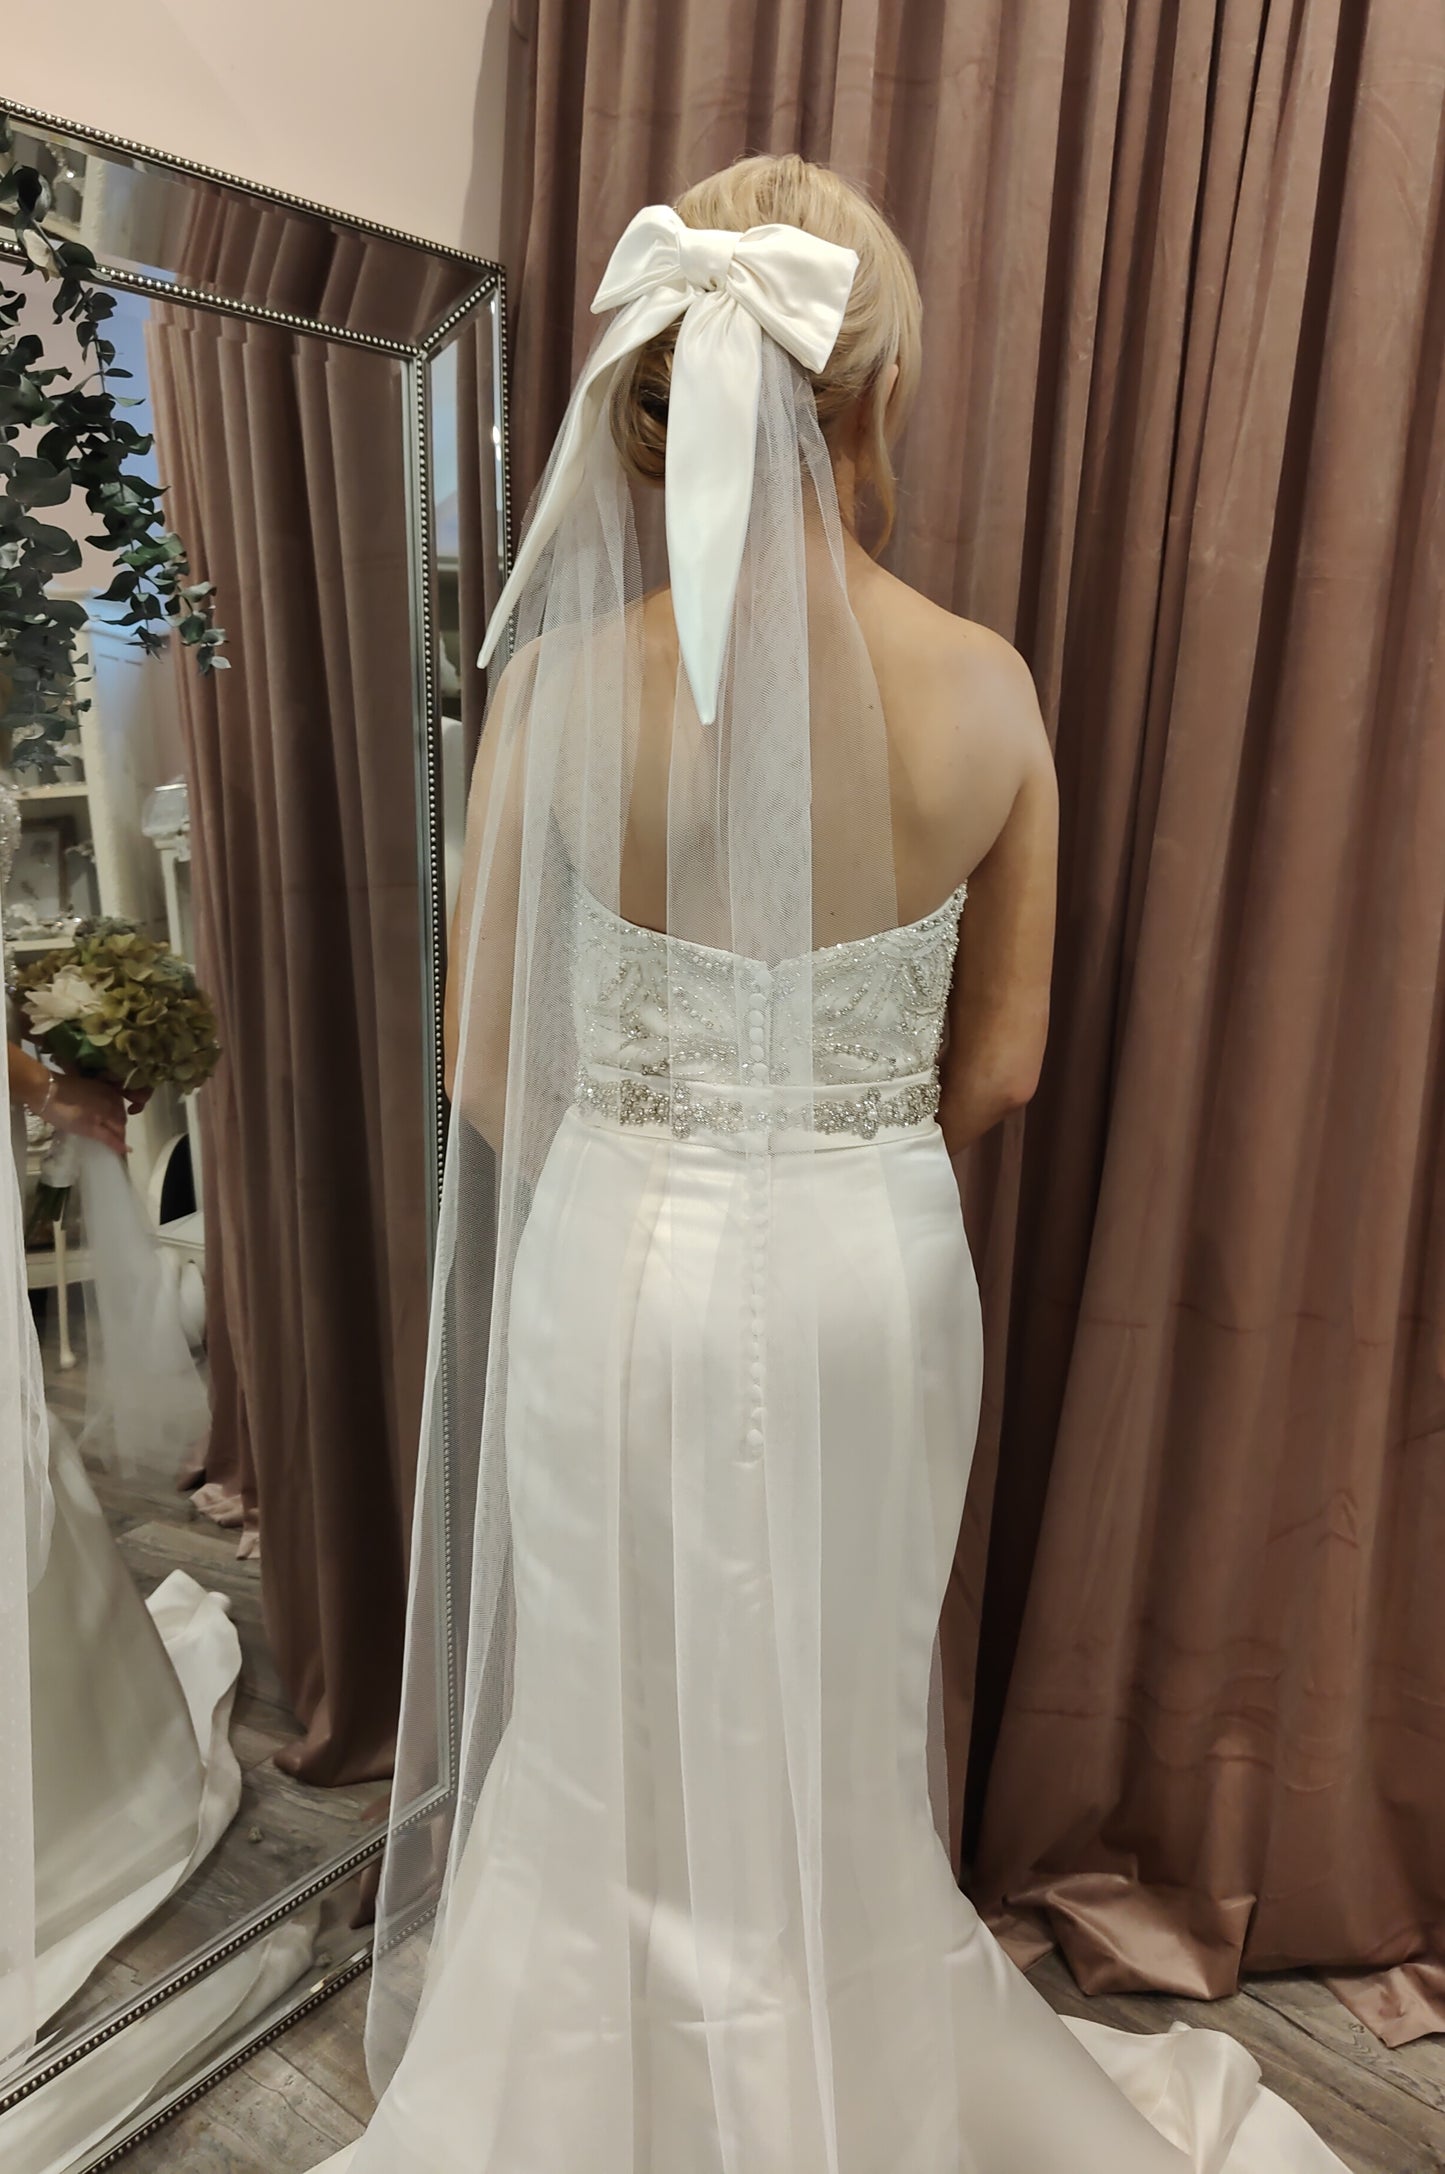 BEAU - Satin Bridal Bow Alternative Veil